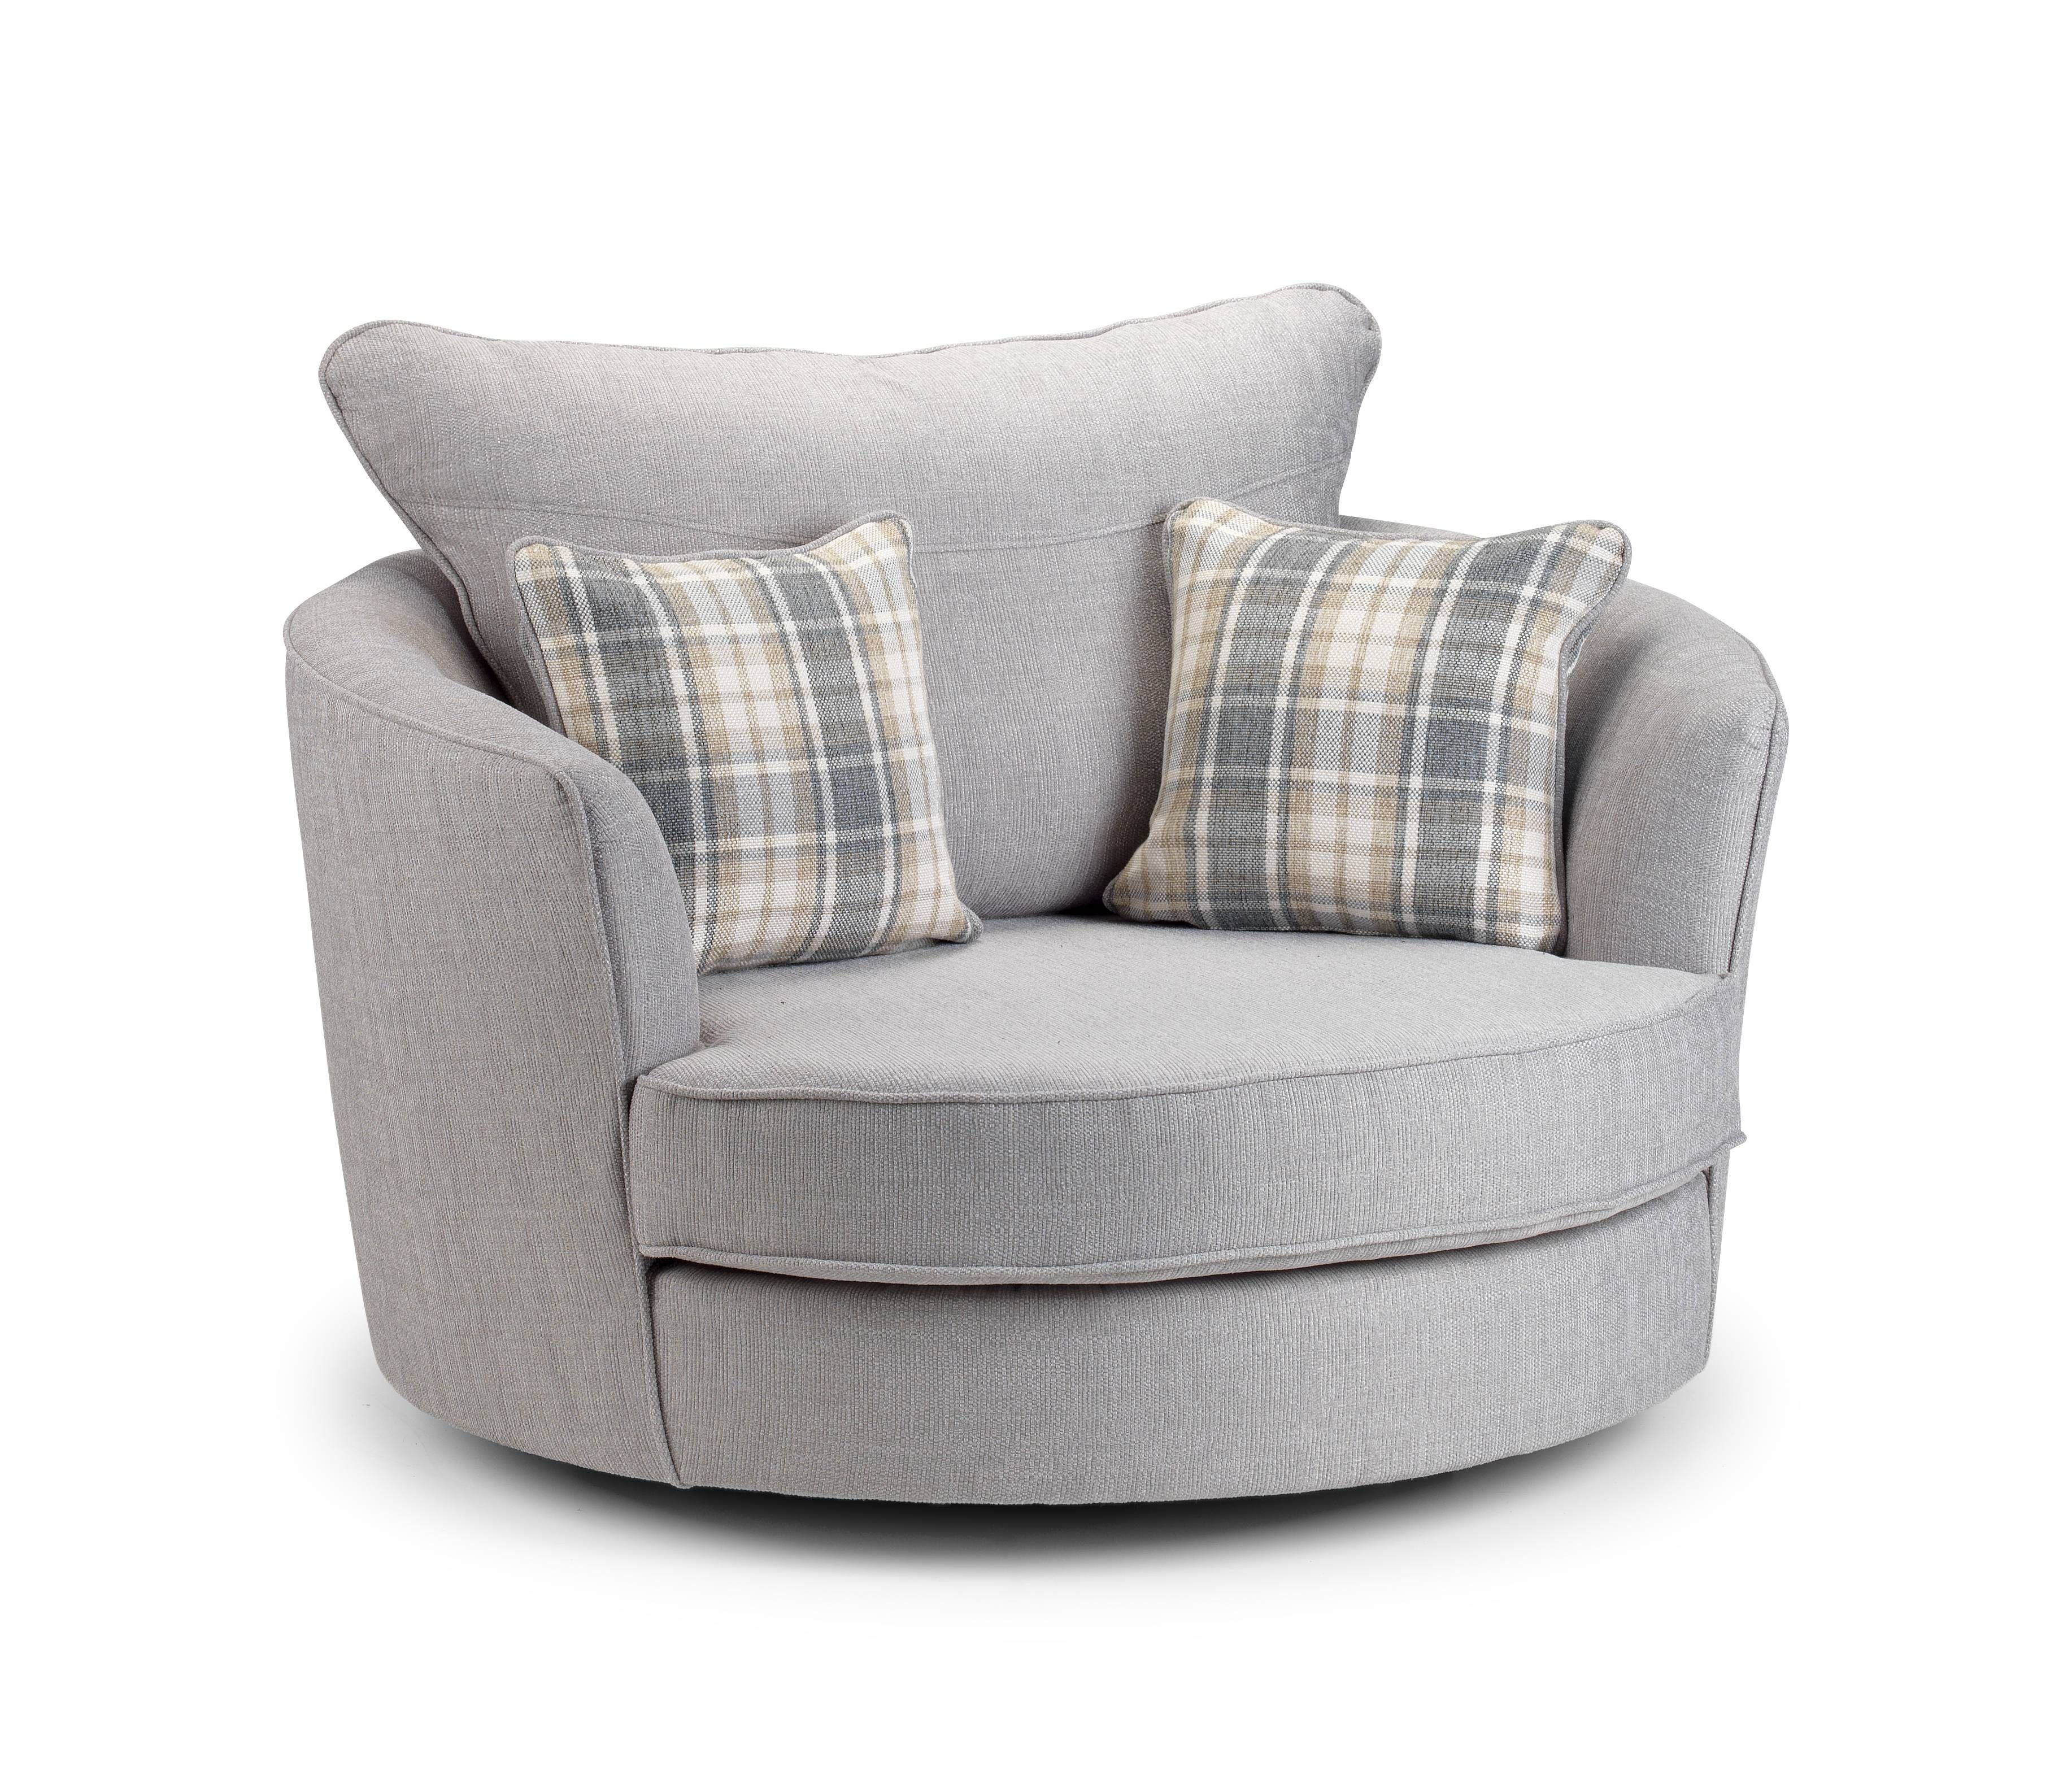 Sofas Center : Shocking Round Sofa Chair Picture Concept Nice Regarding Round Sofas (View 27 of 30)